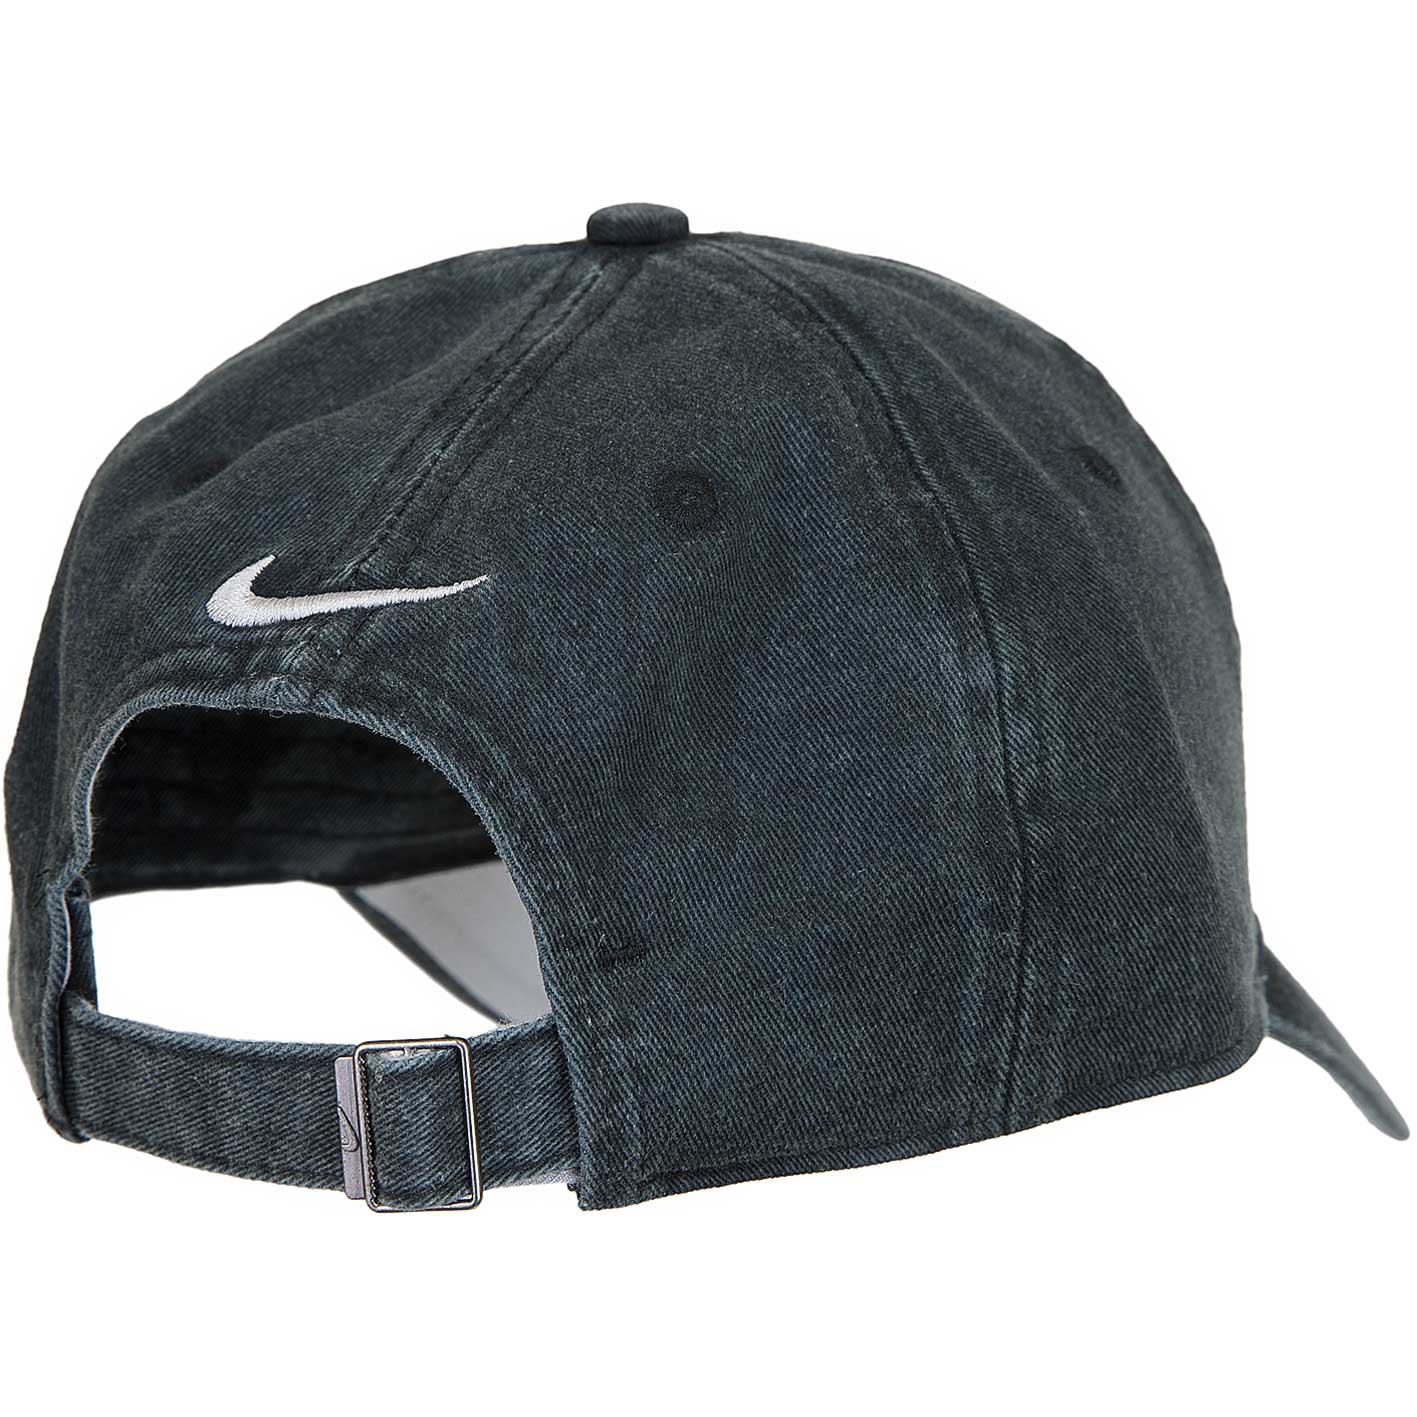 ☆ Nike Snapback Cap H86 Just Do It schwarz/weiß - hier bestellen!